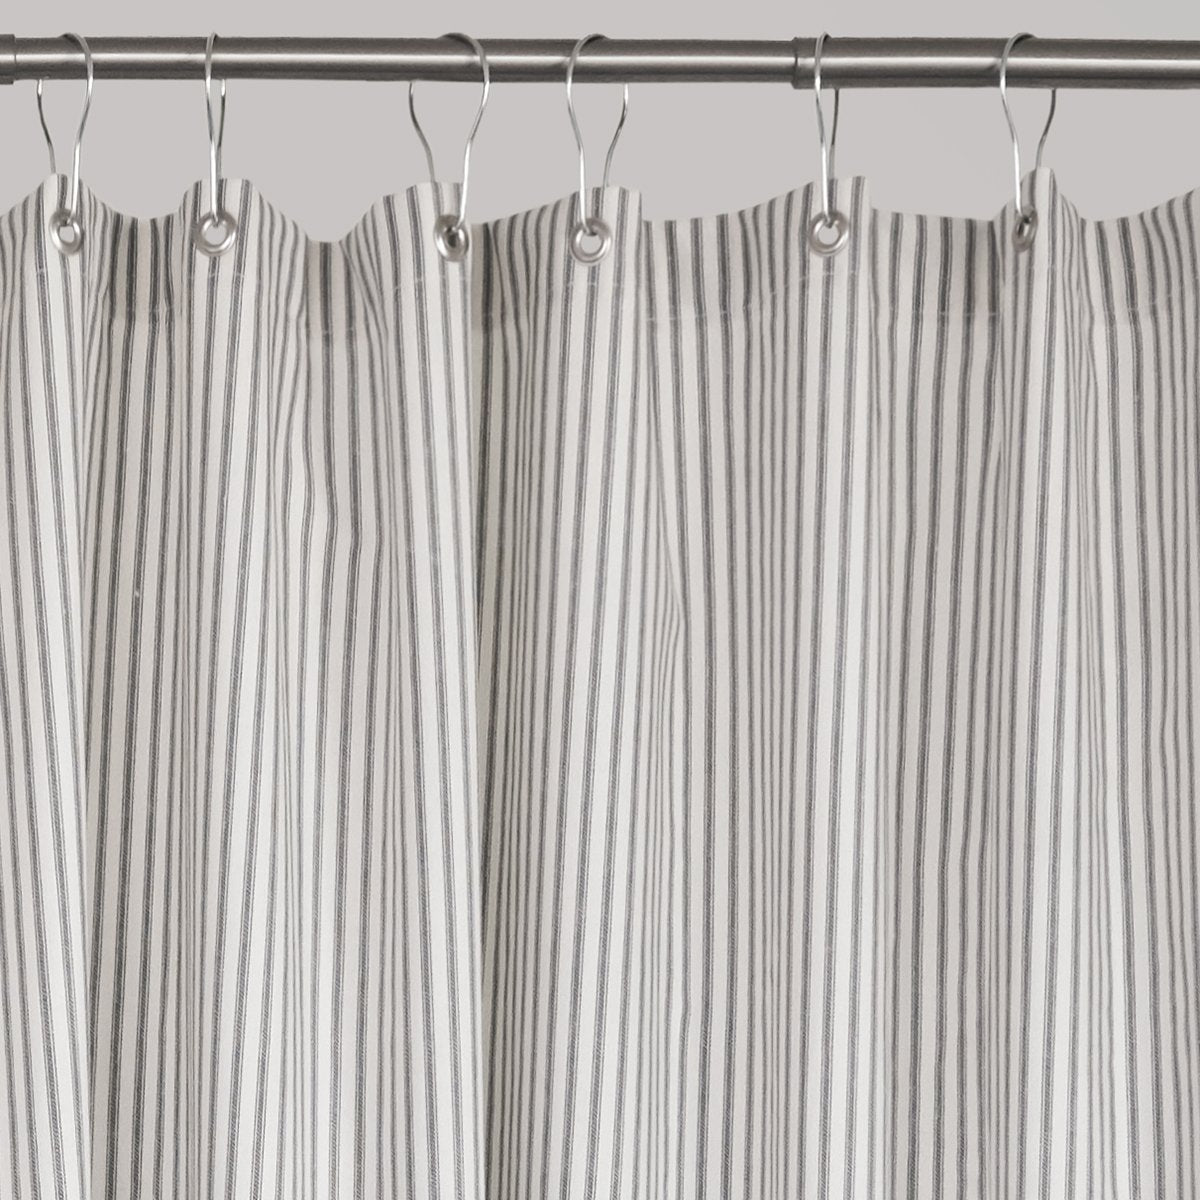 Nautical Ticking Stripe Grommeted Shower Curtain | 72x72 | Grey, Brown, Navy, Black, Red Ticking Stripe Fabric